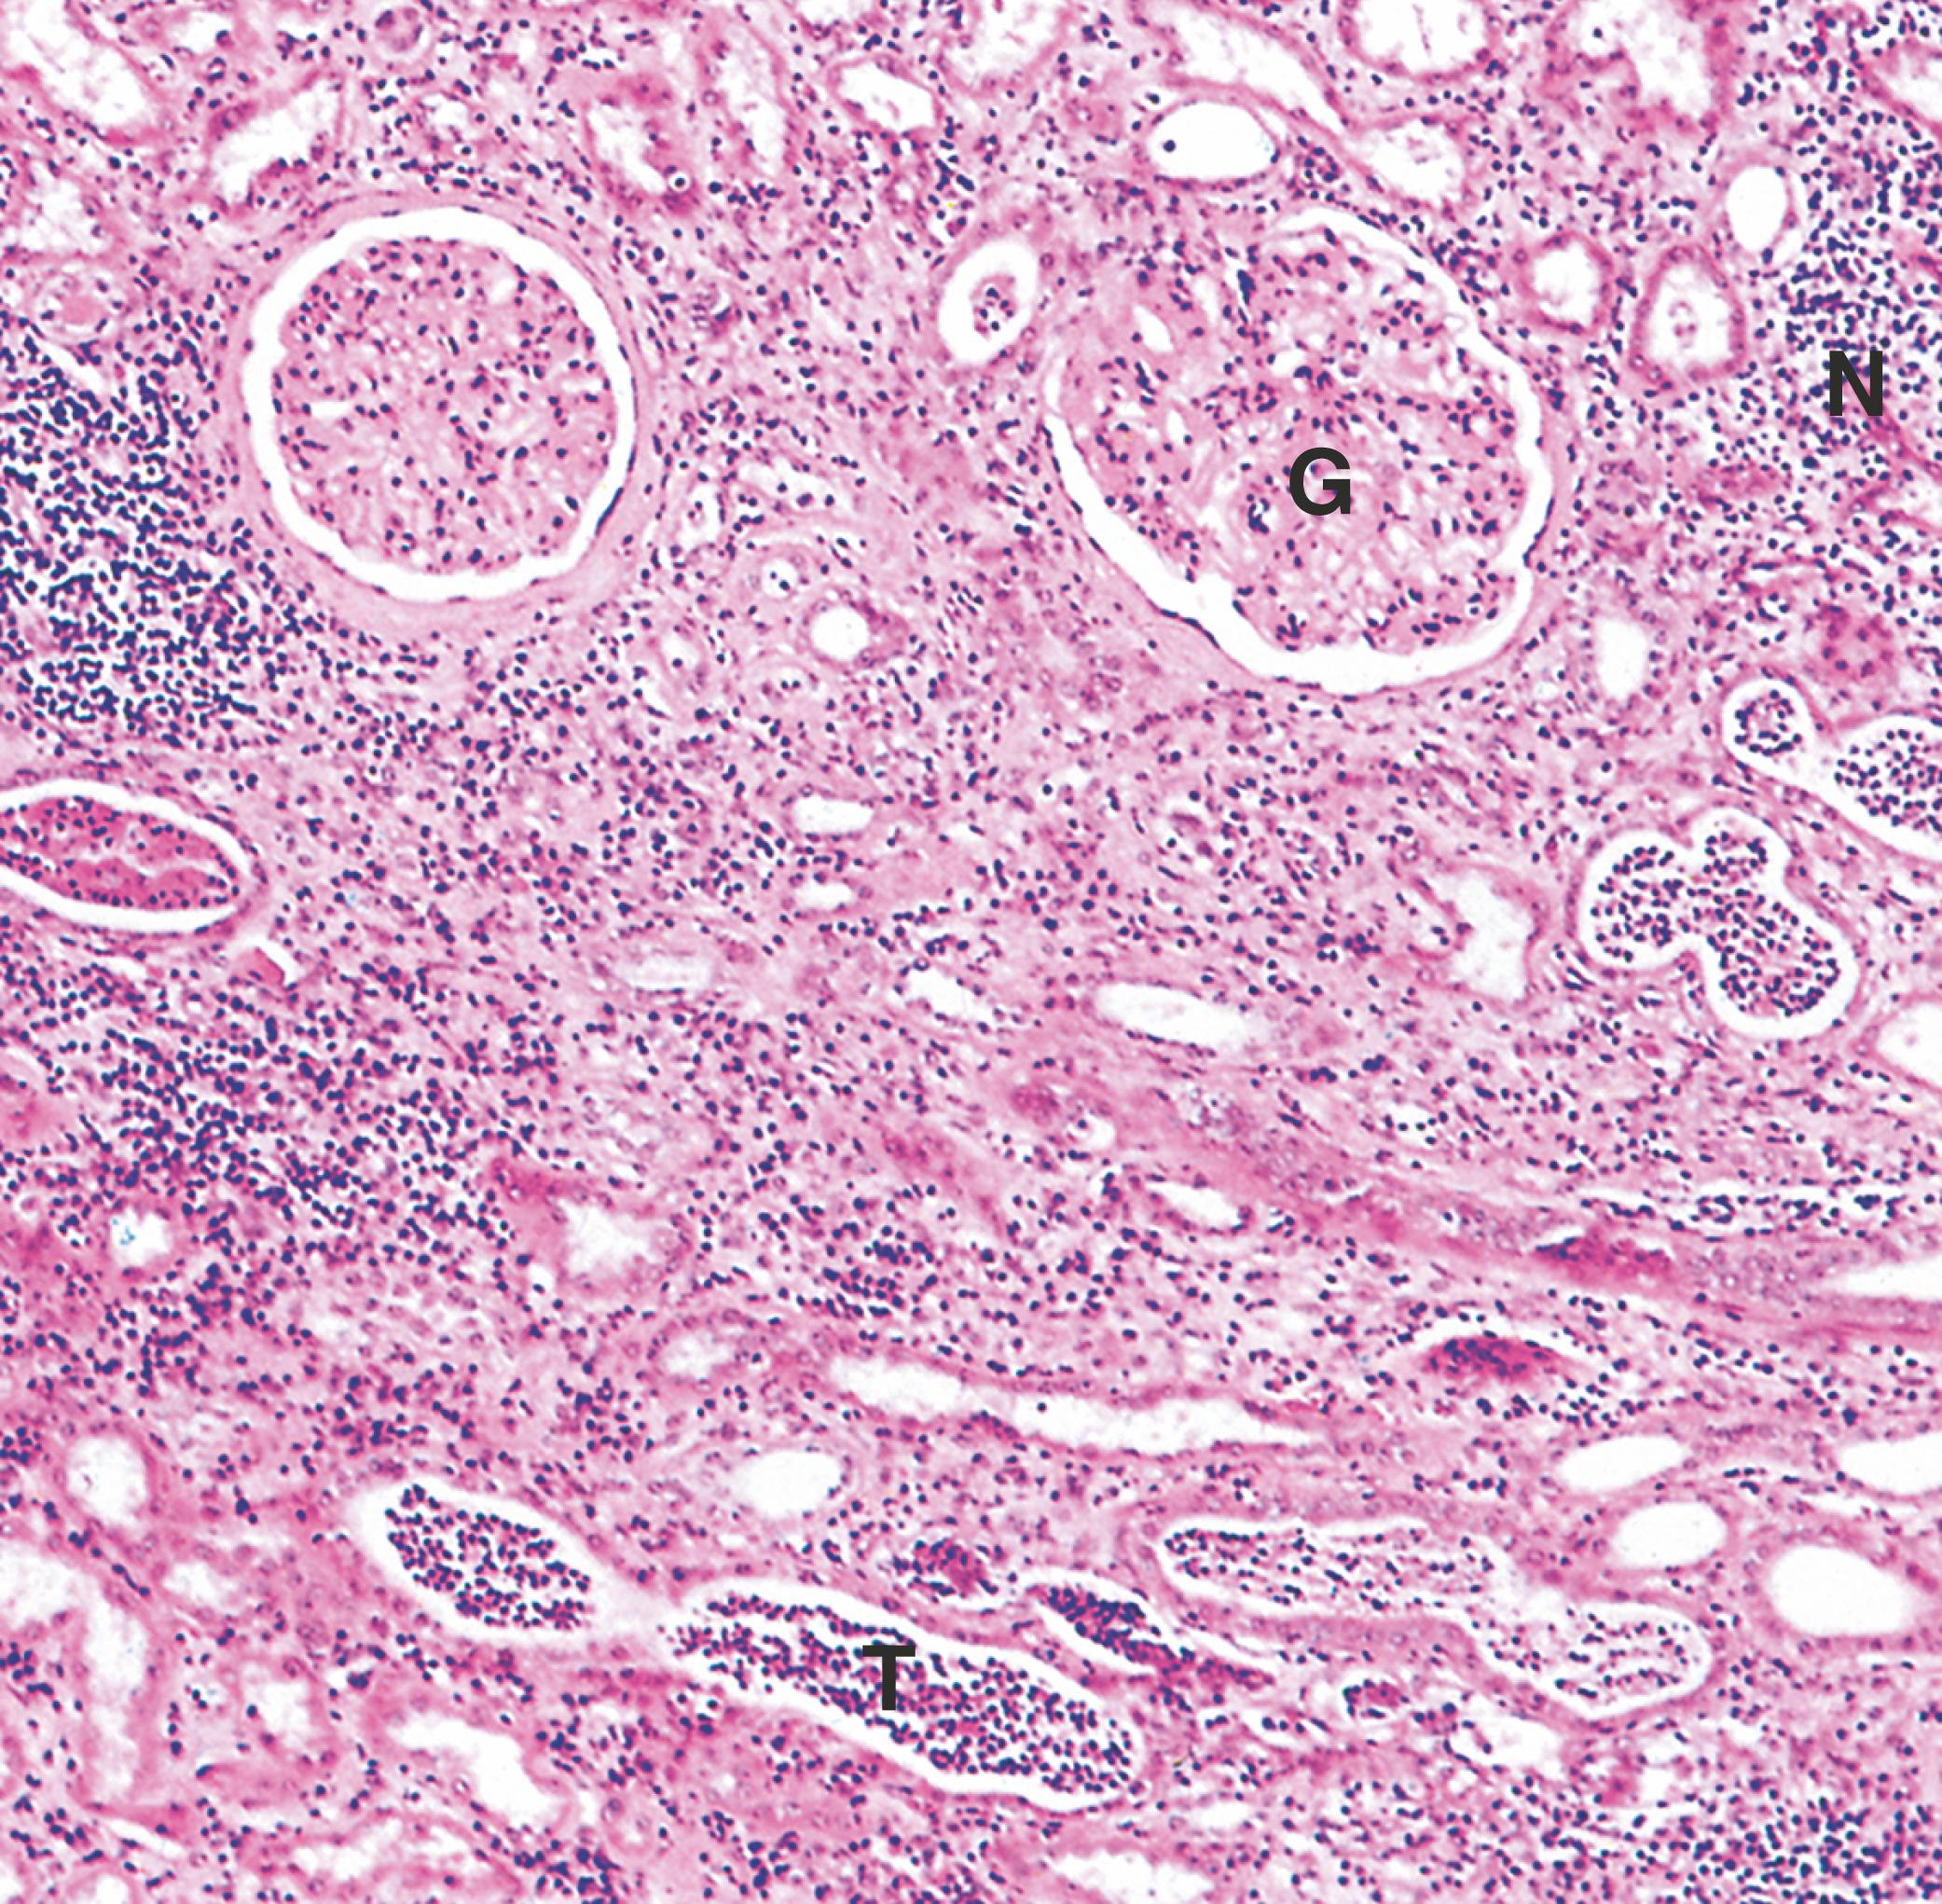 Fig. 15.11, Acute pyelonephritis (MP).